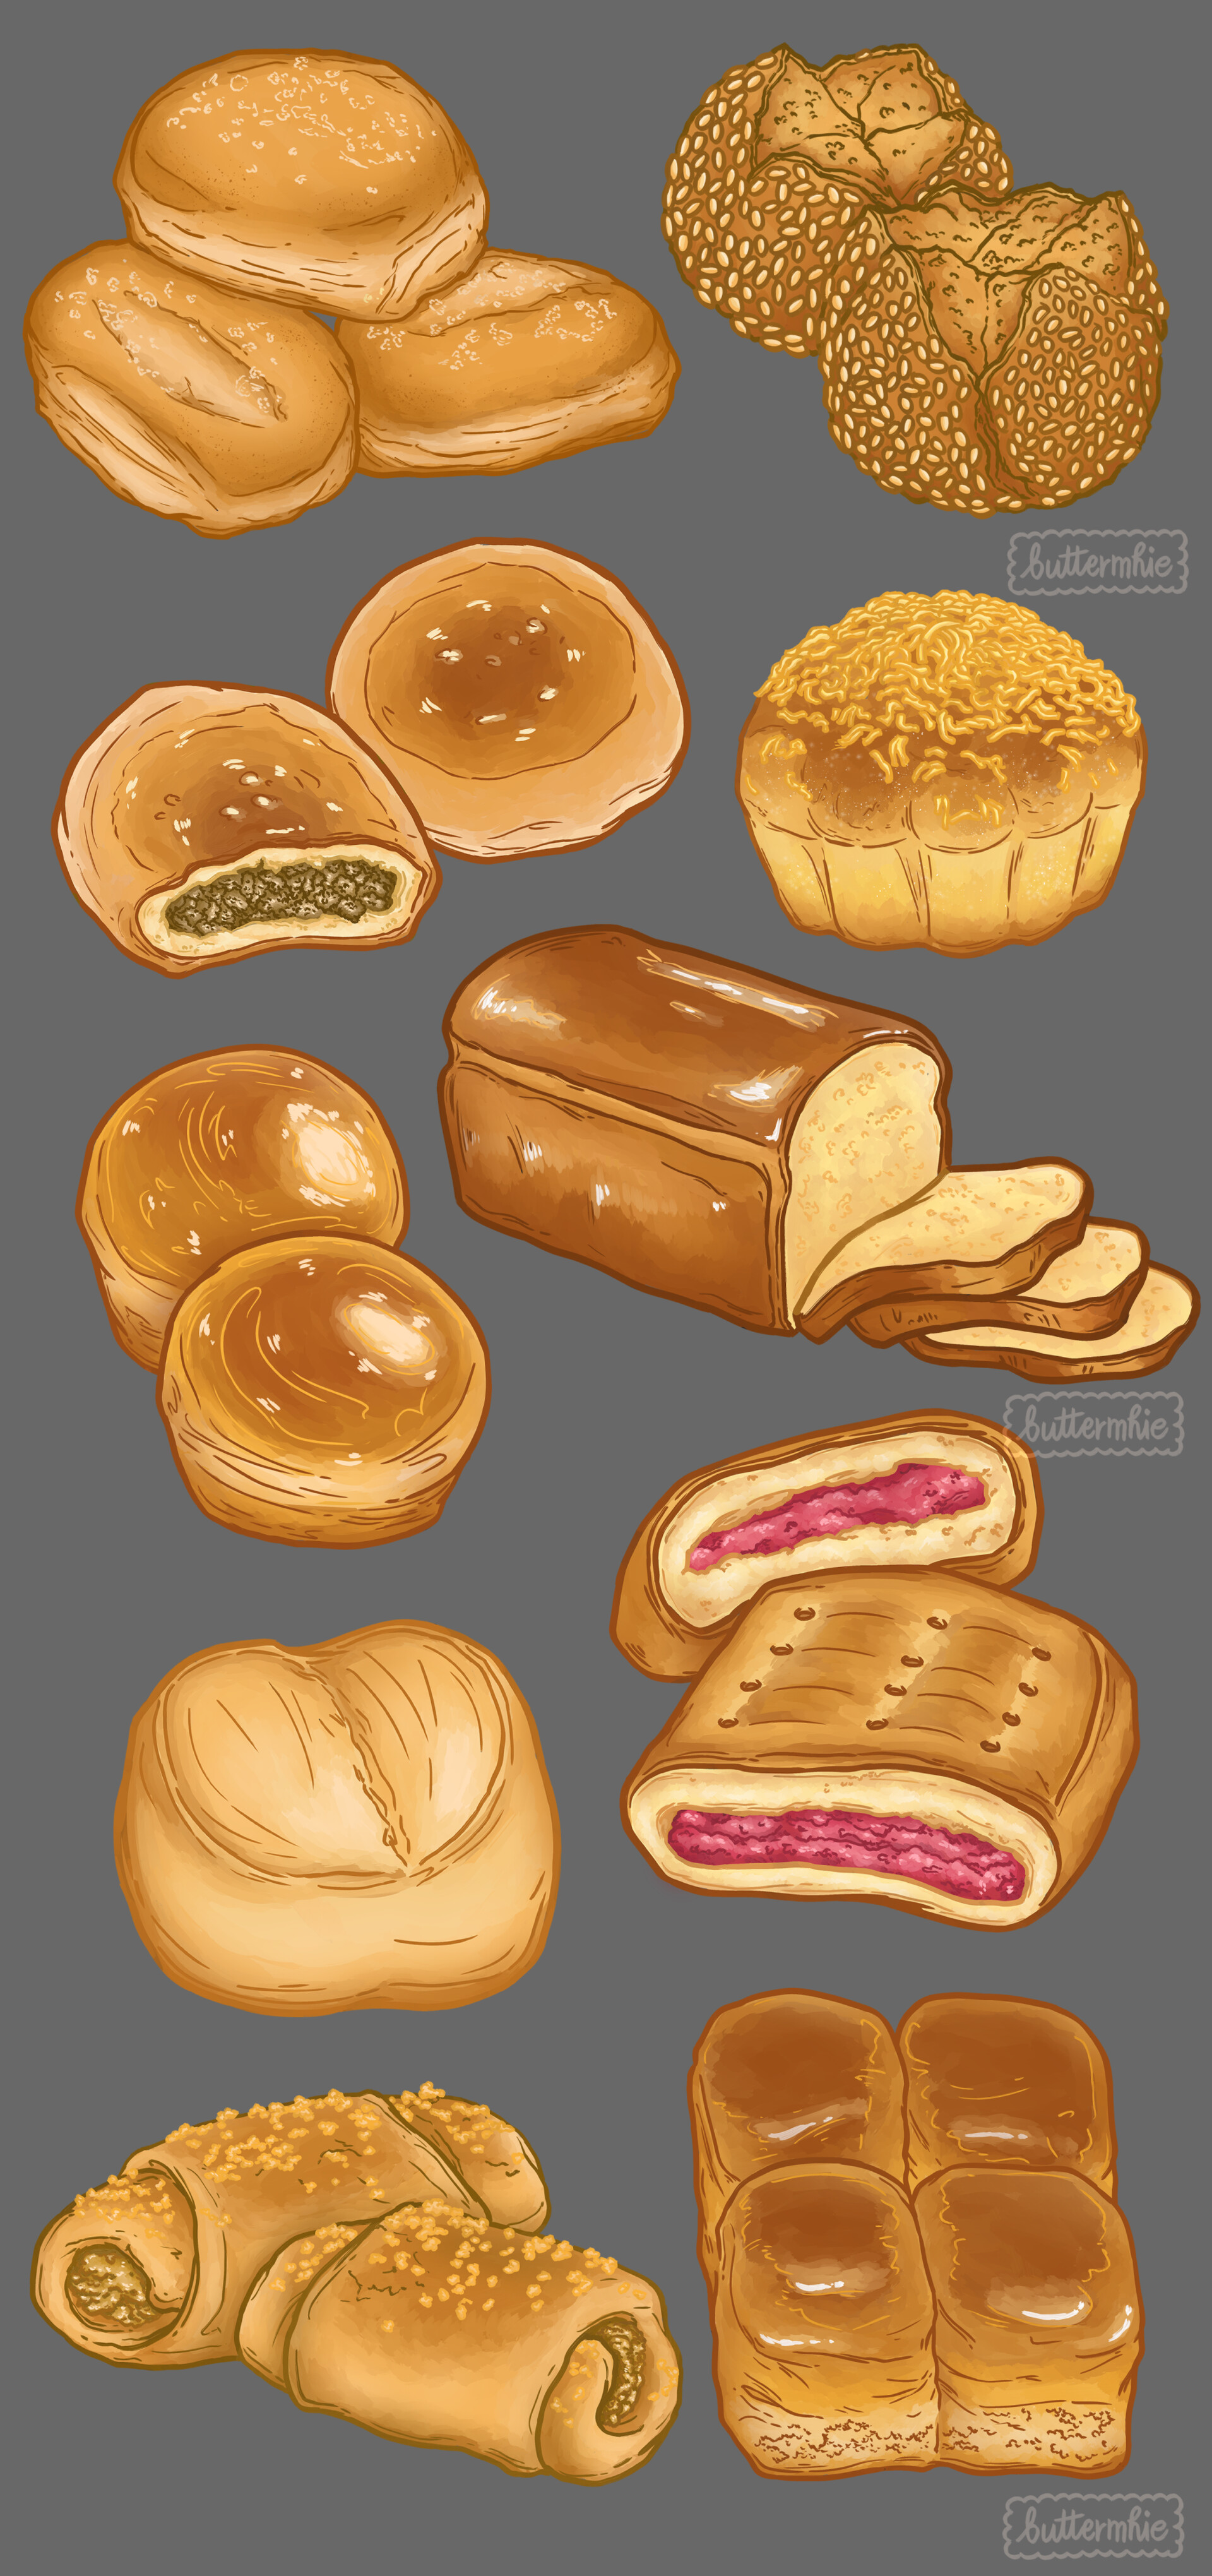 20 Fantastic Bread Drawing Ideas - Beautiful Dawn Designs | Bread, Loaf  bread, Drawings